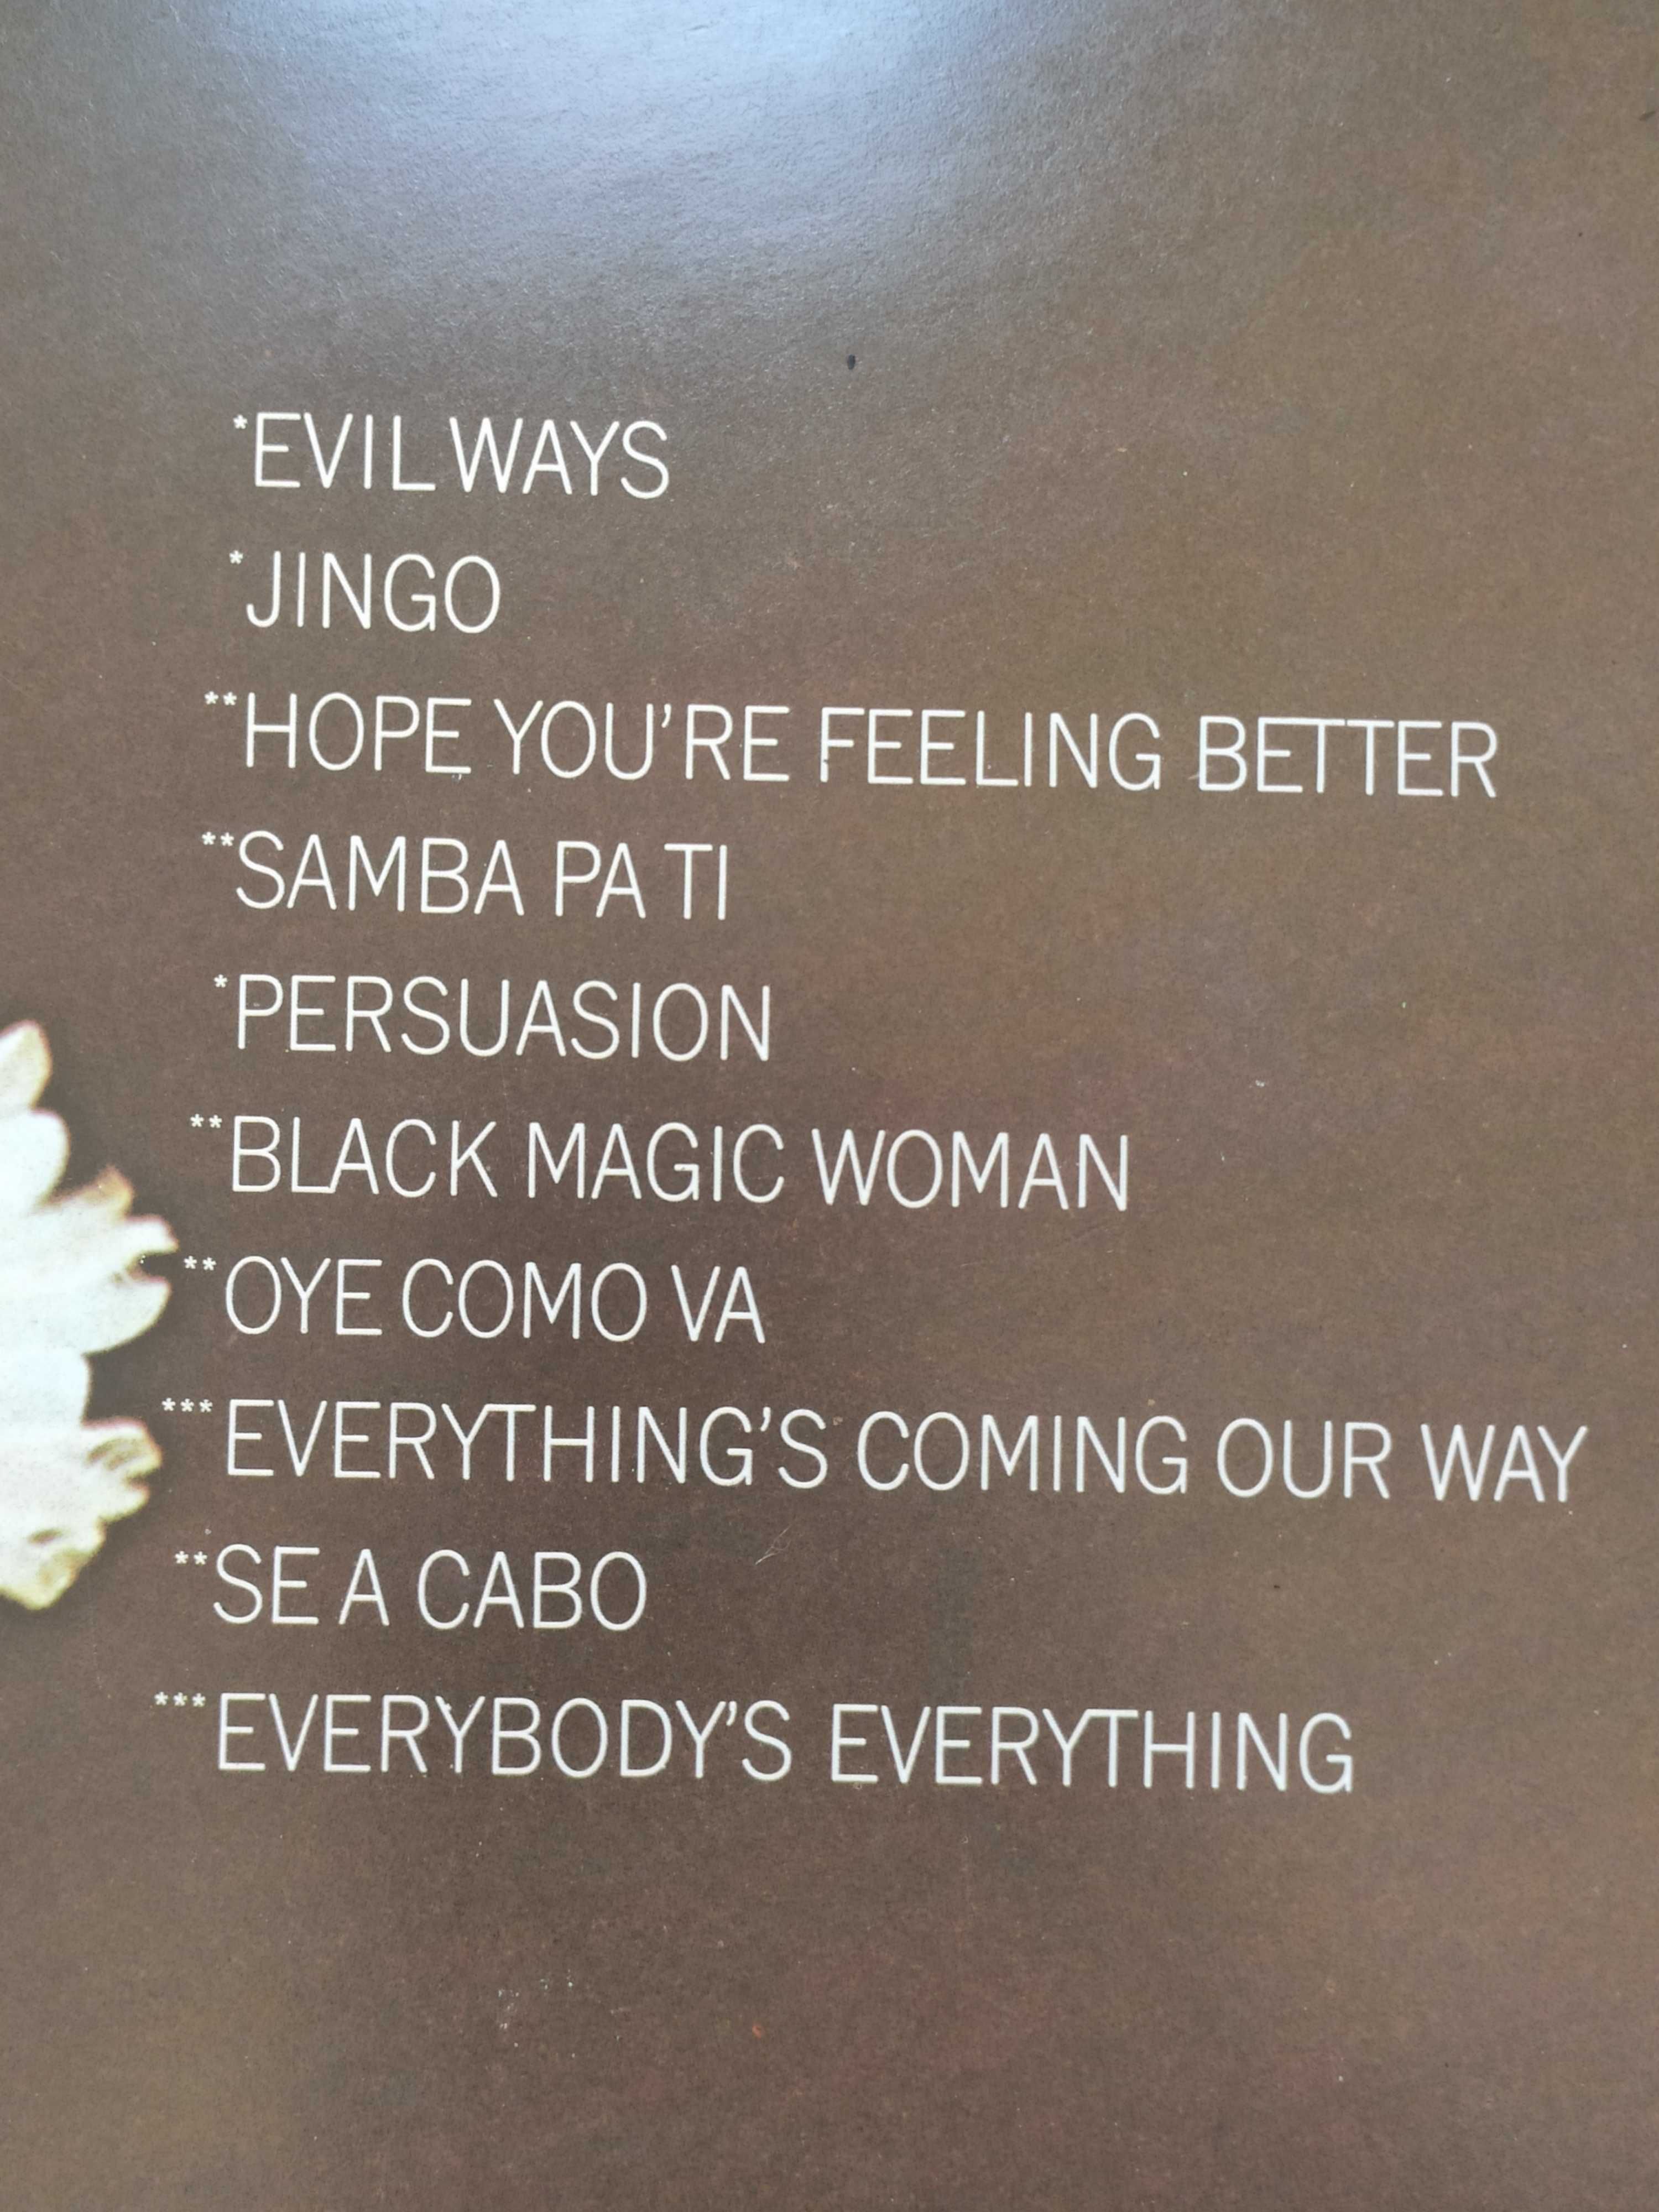 Santana LP Greatest Hits, 1 wyd ang 1974 SAMBA PA TI Black Magic Woman